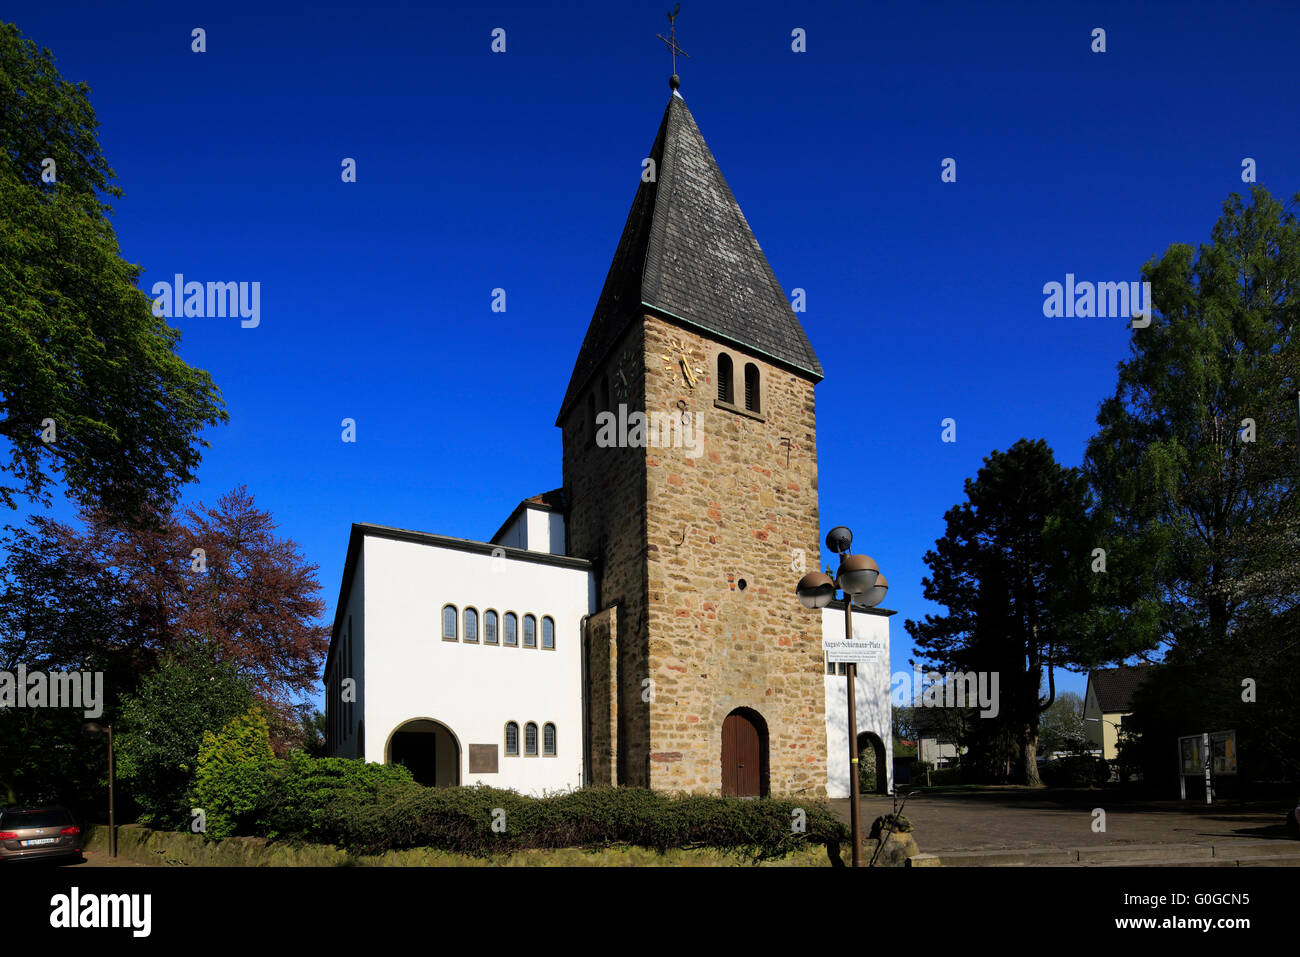 Katholische Pfarrkirche Sankt Peter und Paul im Rel, Oer-Erkenschwick, commune française de Ruhr, Allemagne Banque D'Images